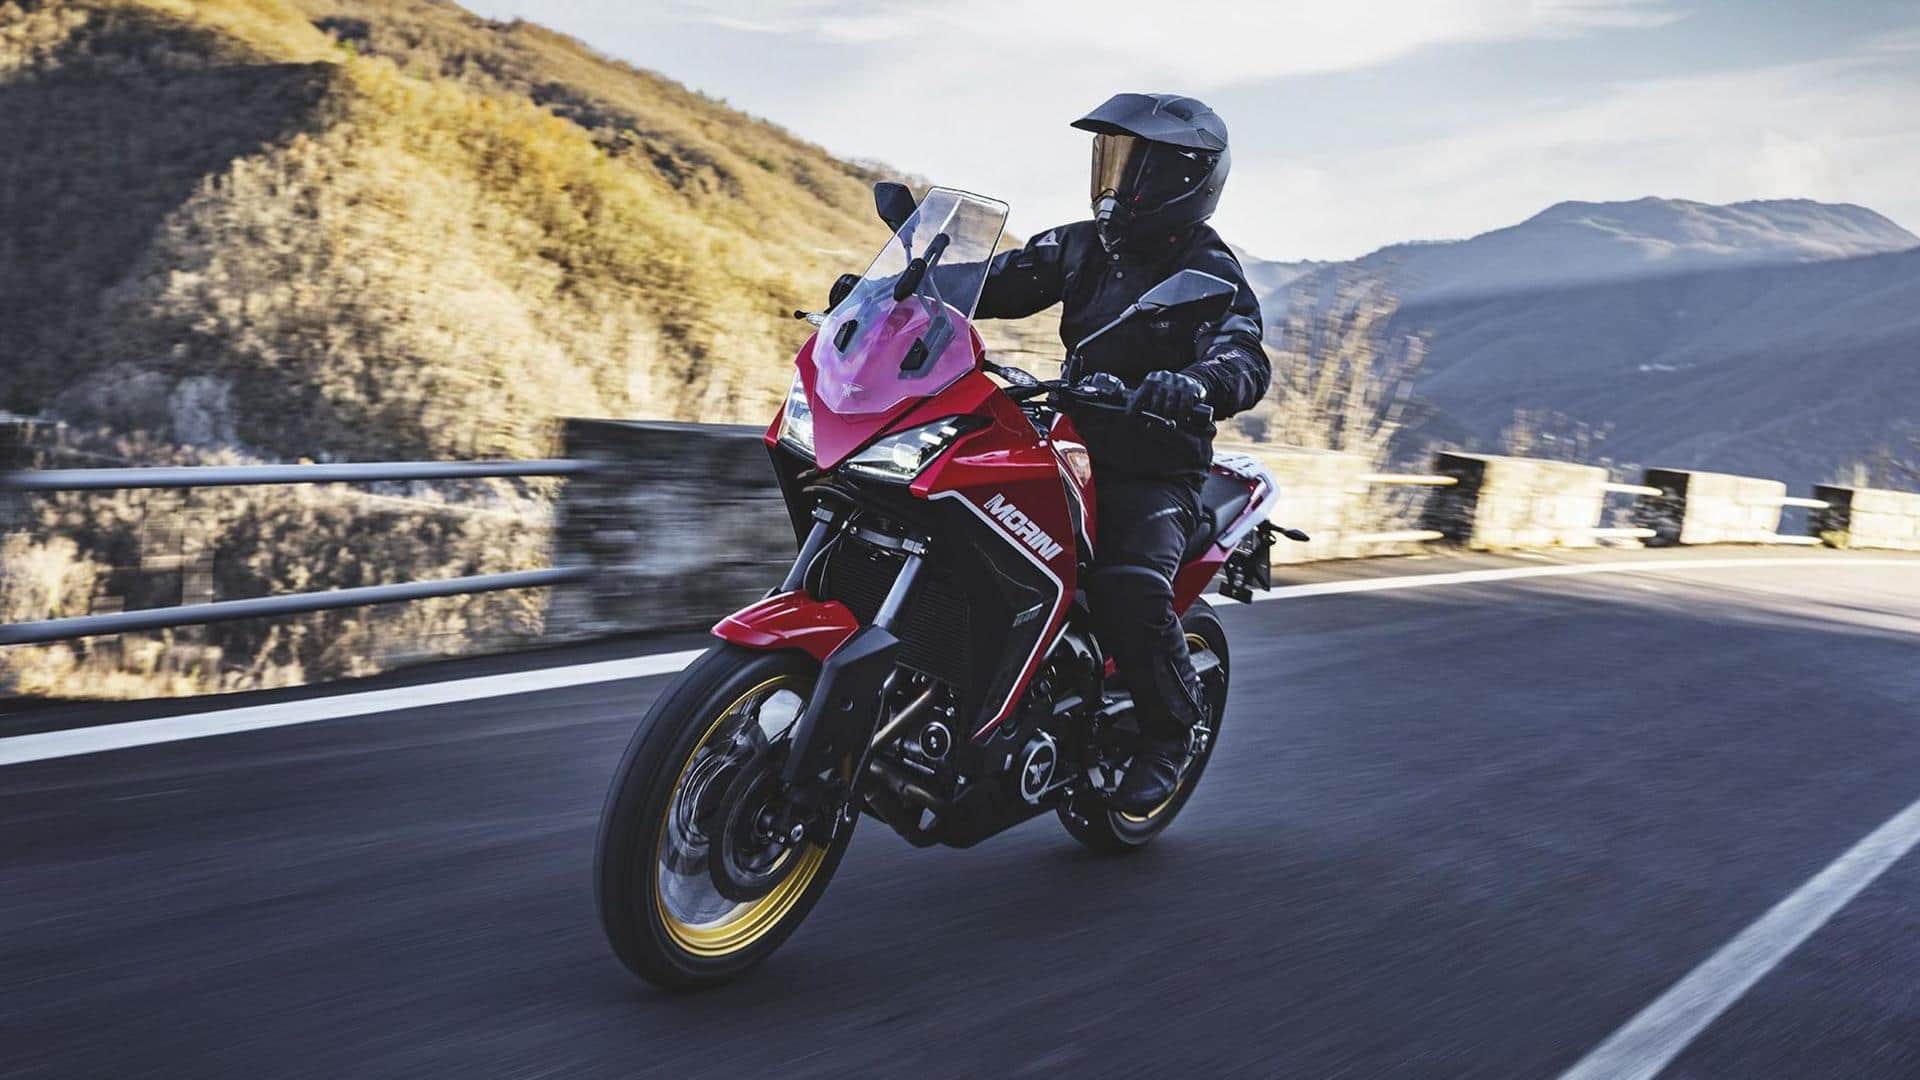 Moto Morini X-CAPE 1200 breaks cover for global markets